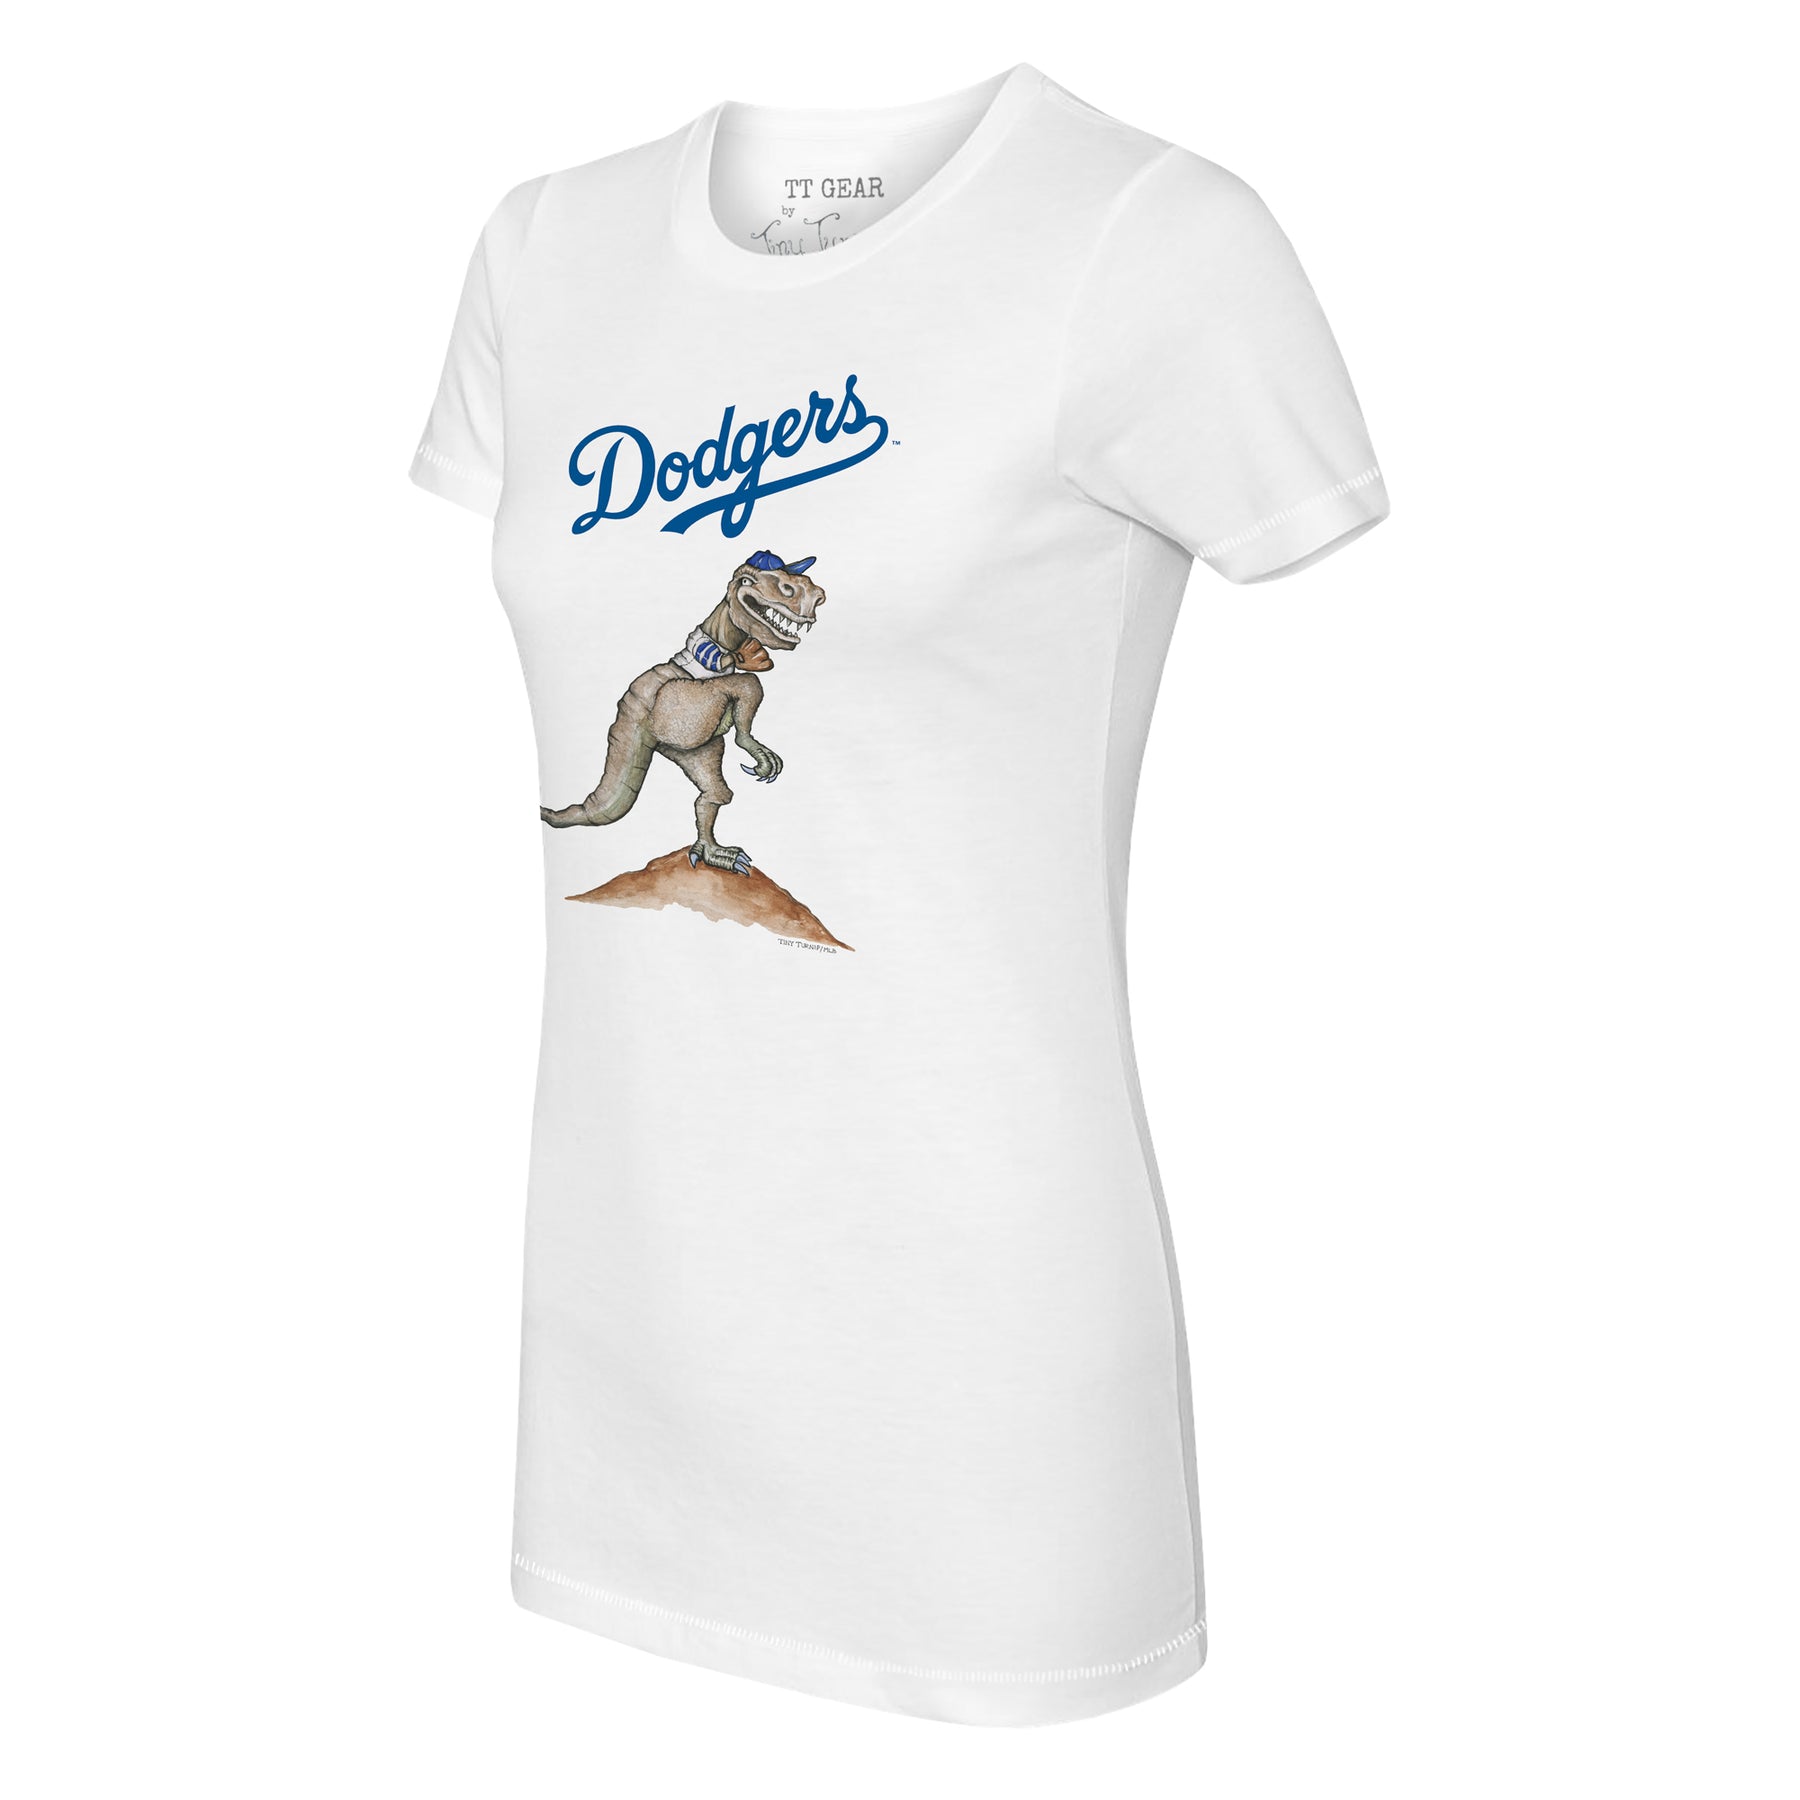 Los Angeles Dodgers Apparel & Gear